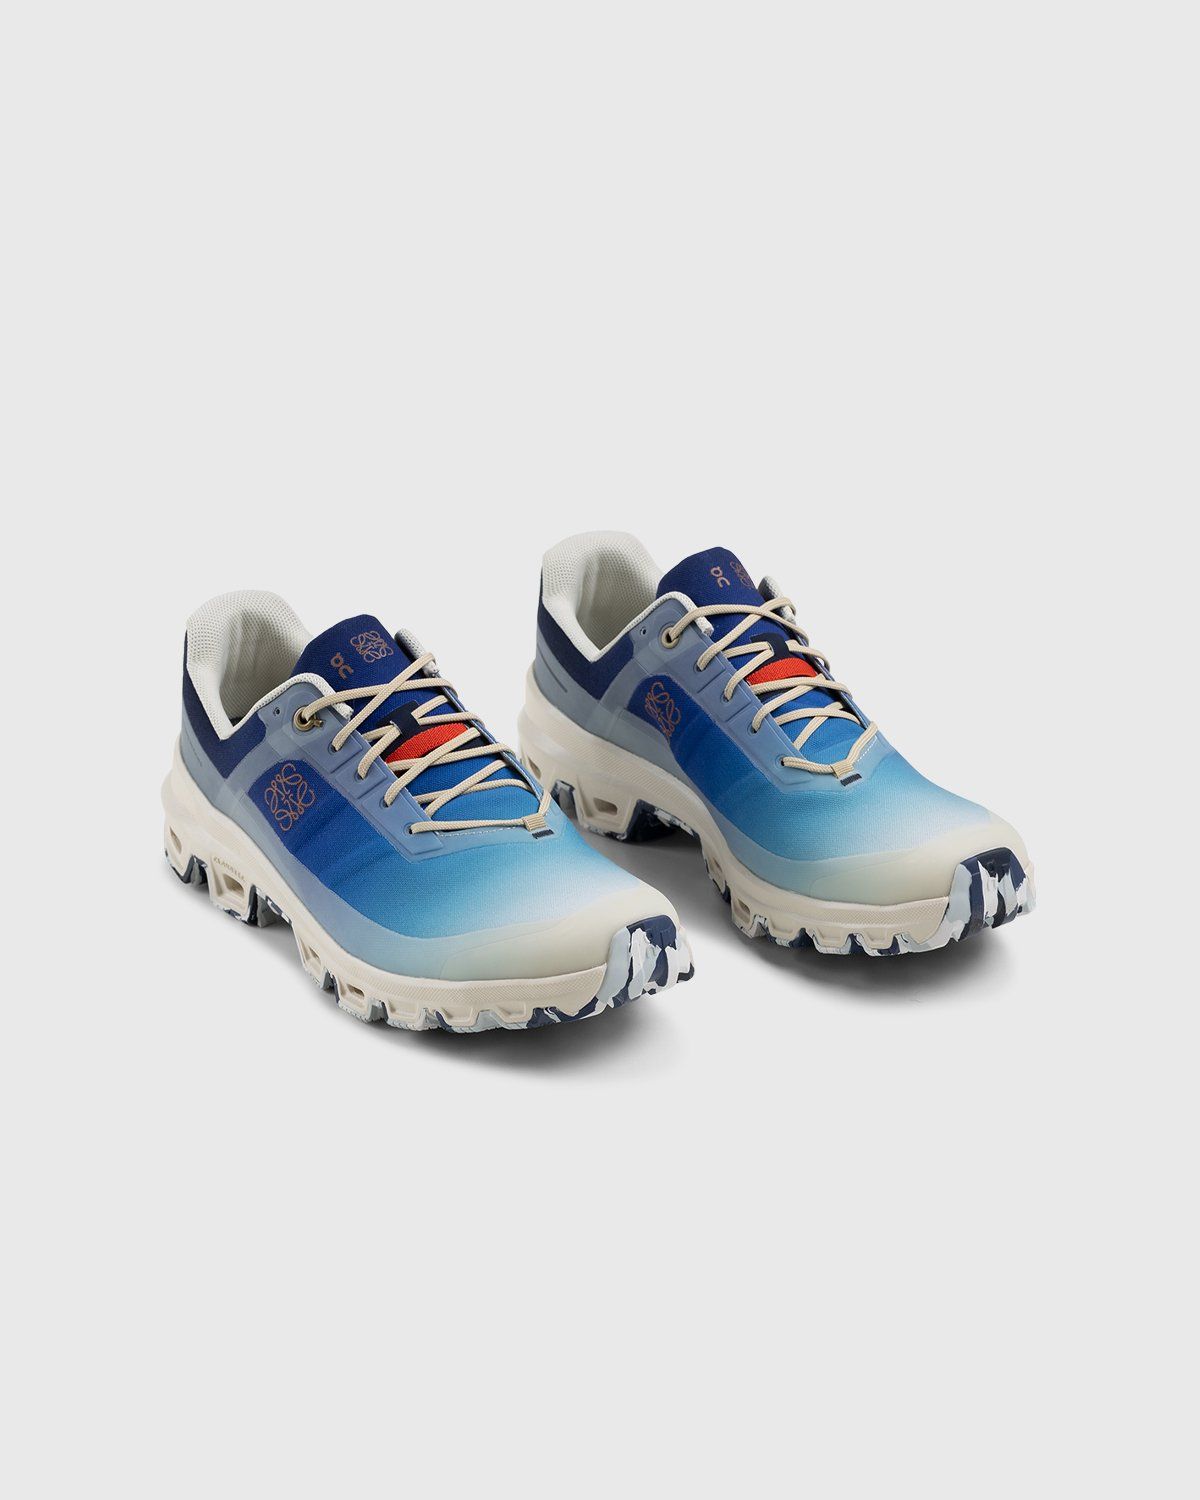 Loewe x On – Women's Cloudventure Gradient Blue - Low Top Sneakers - Blue - Image 3